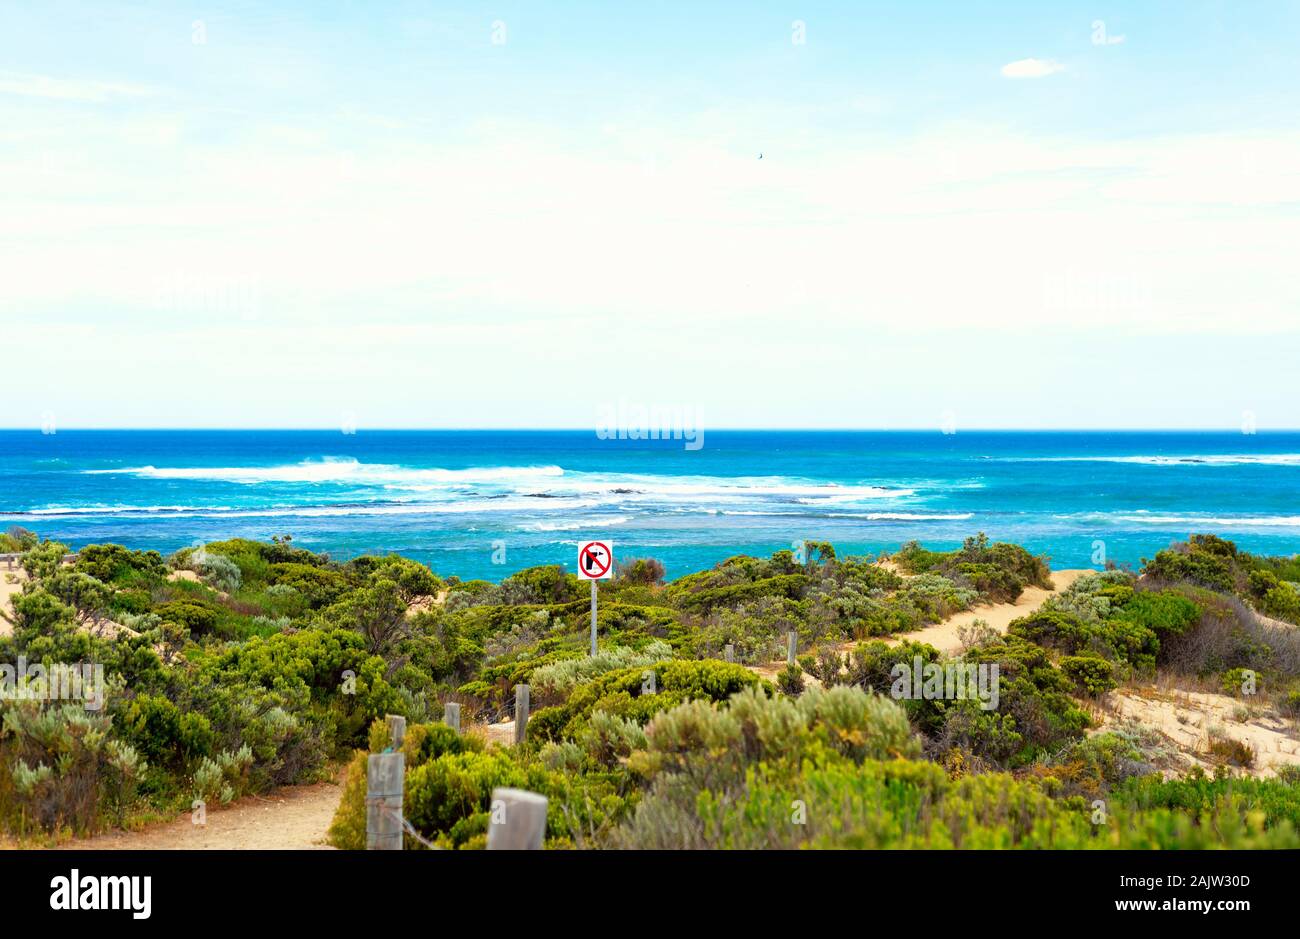 Sign 'Unstable cliffs' on a australian beach. Photo taken from Bowman scenic drive, Beachport, Australia. Stock Photo